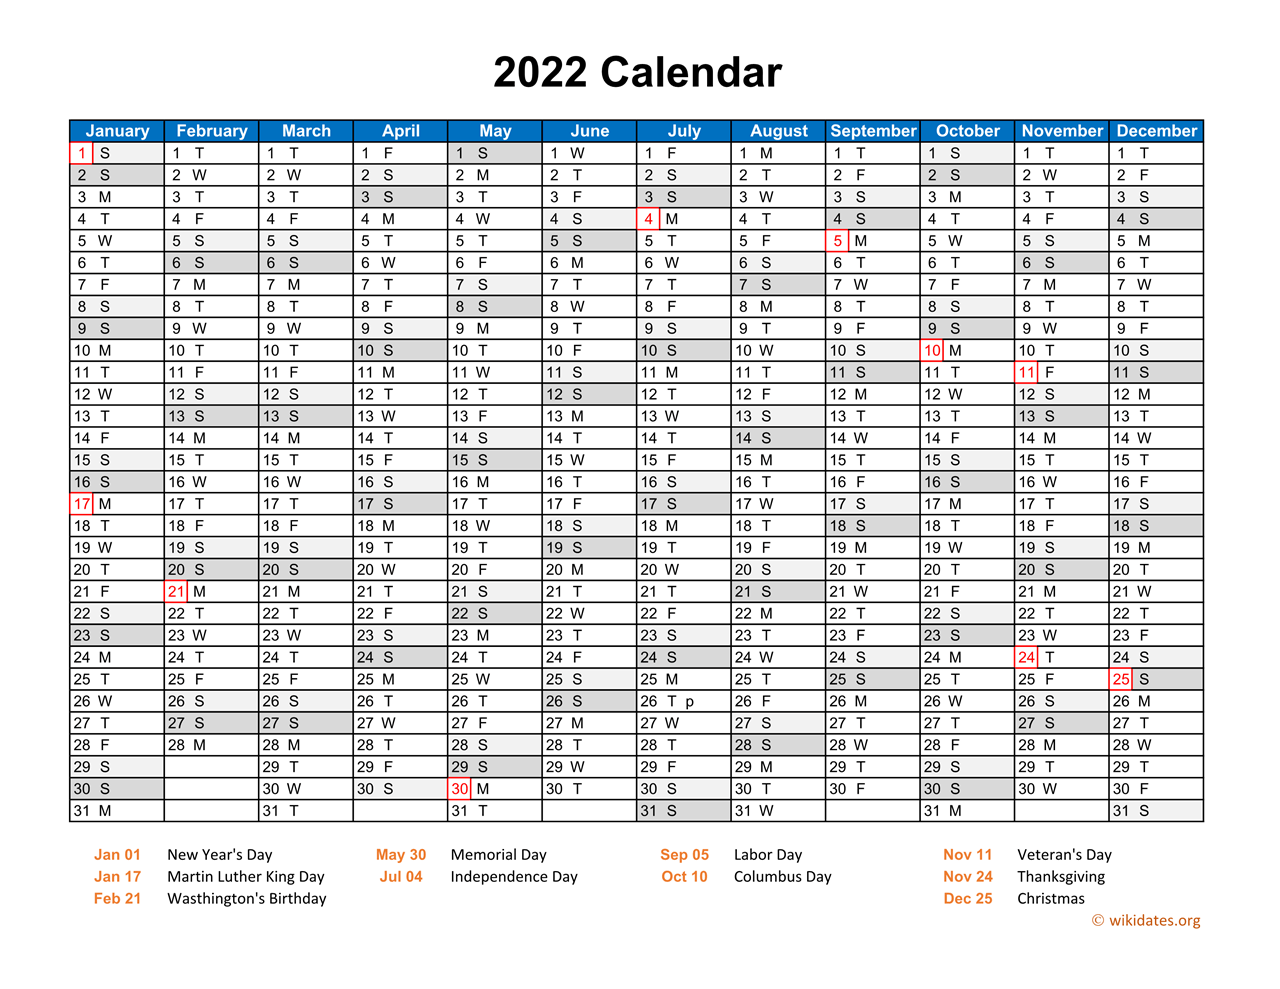 wwdc 2022 calendar